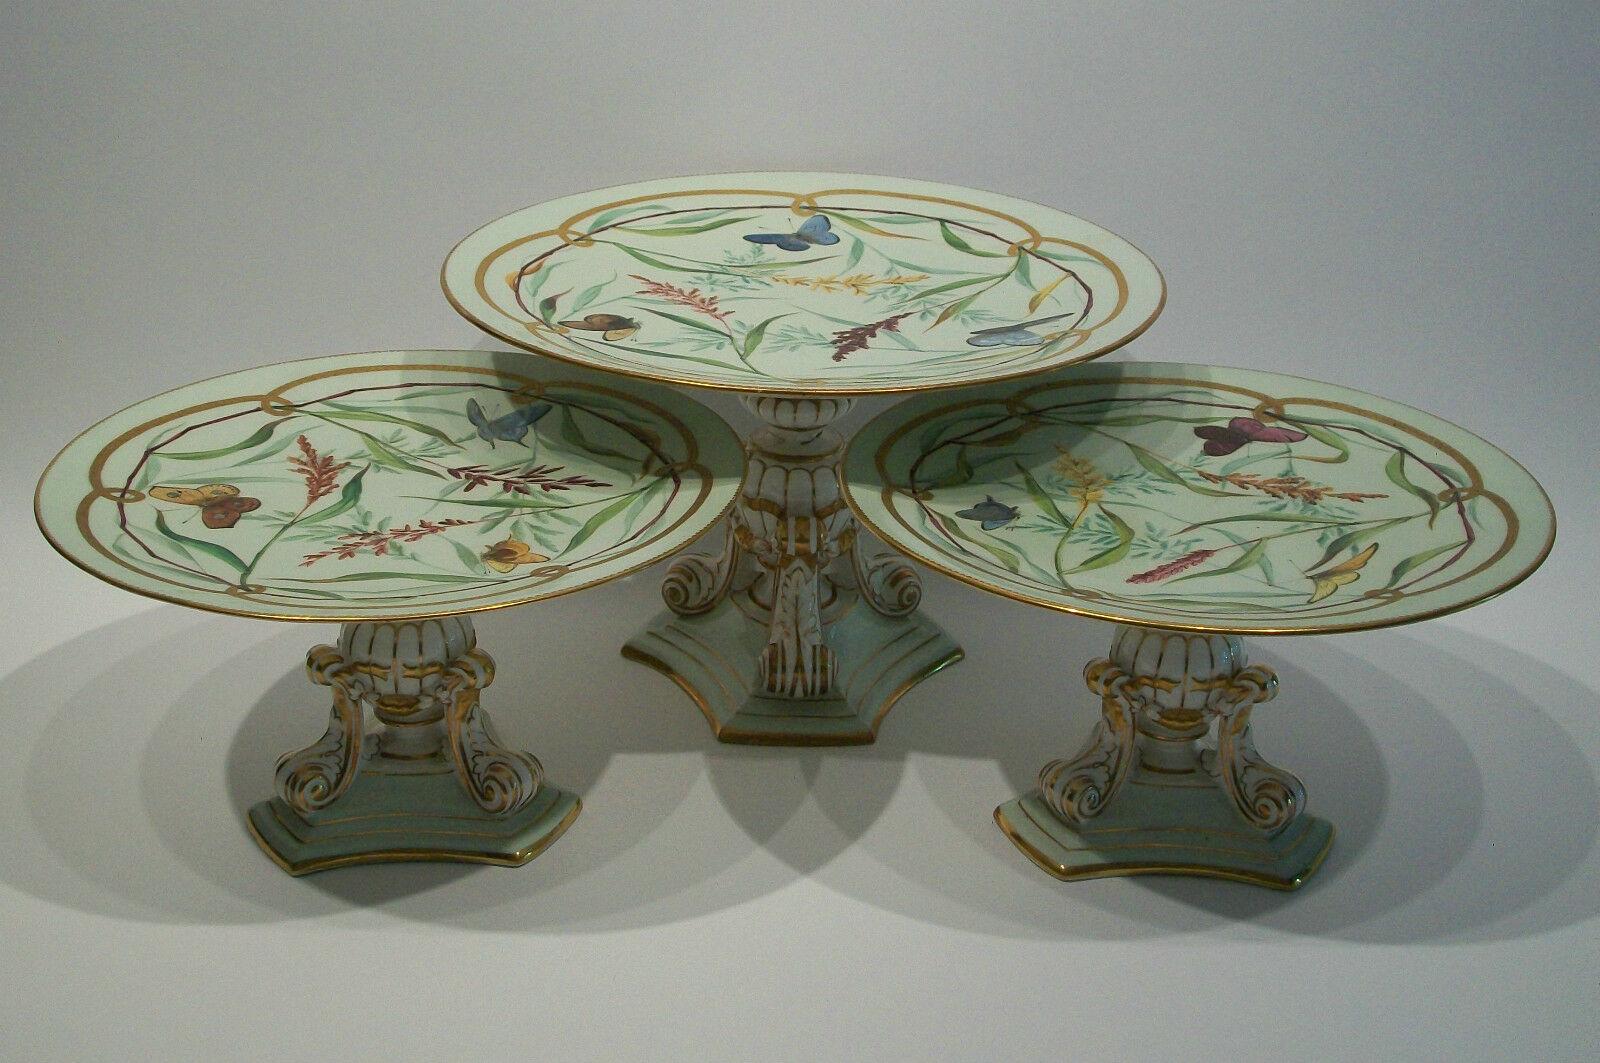 Ceramic James Green & Nephew, Porcelain Dessert Service with Butterflies, circa 1870